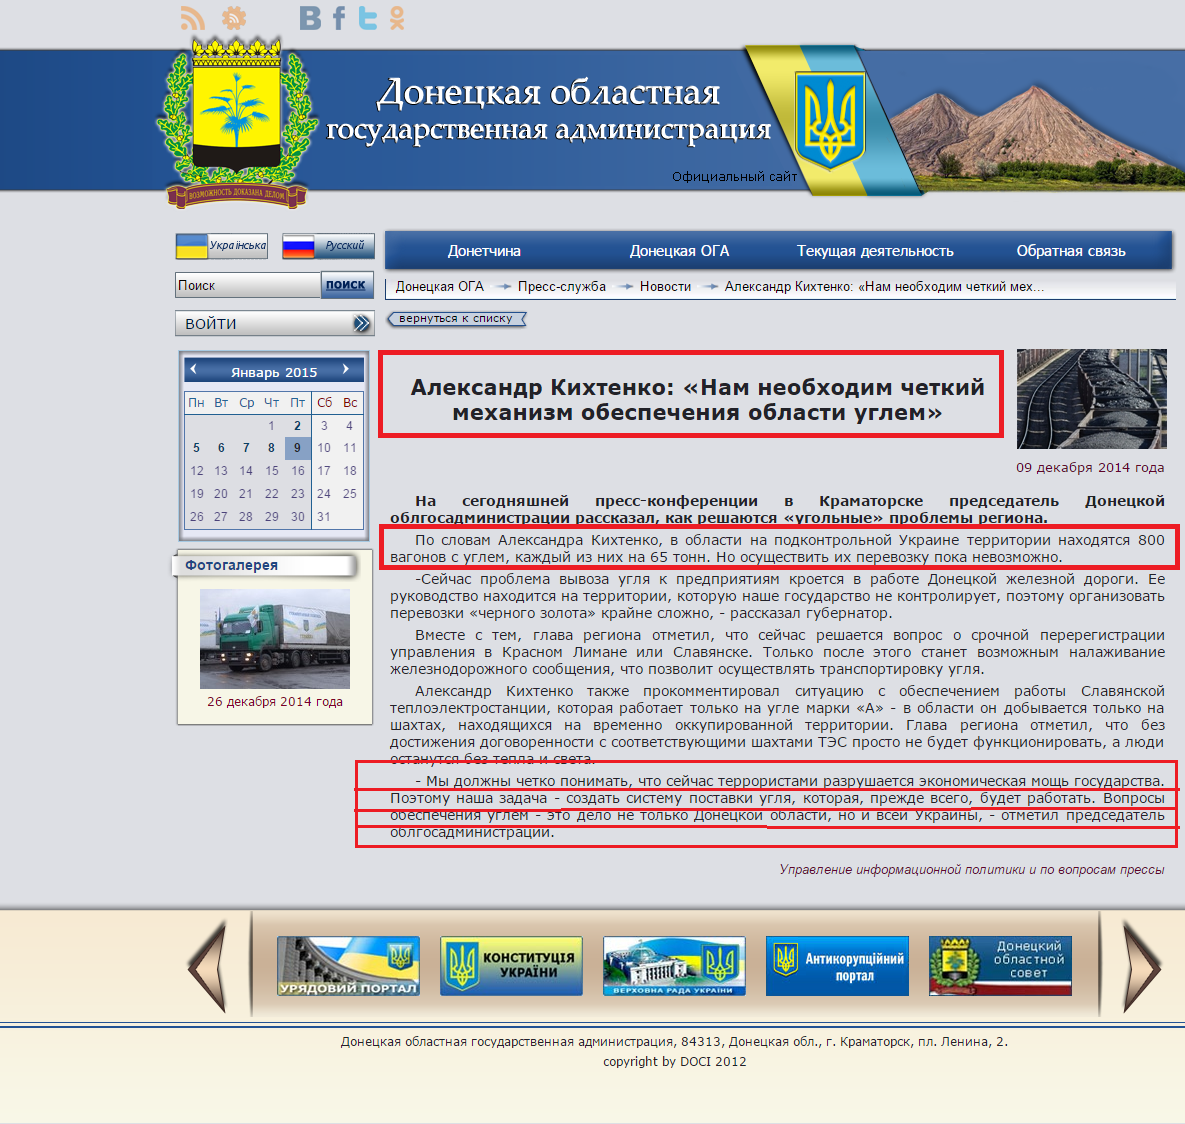 http://donoda.gov.ua/?lang=ru&sec=02.03.09&iface=Public&cmd=view&args=id:22541